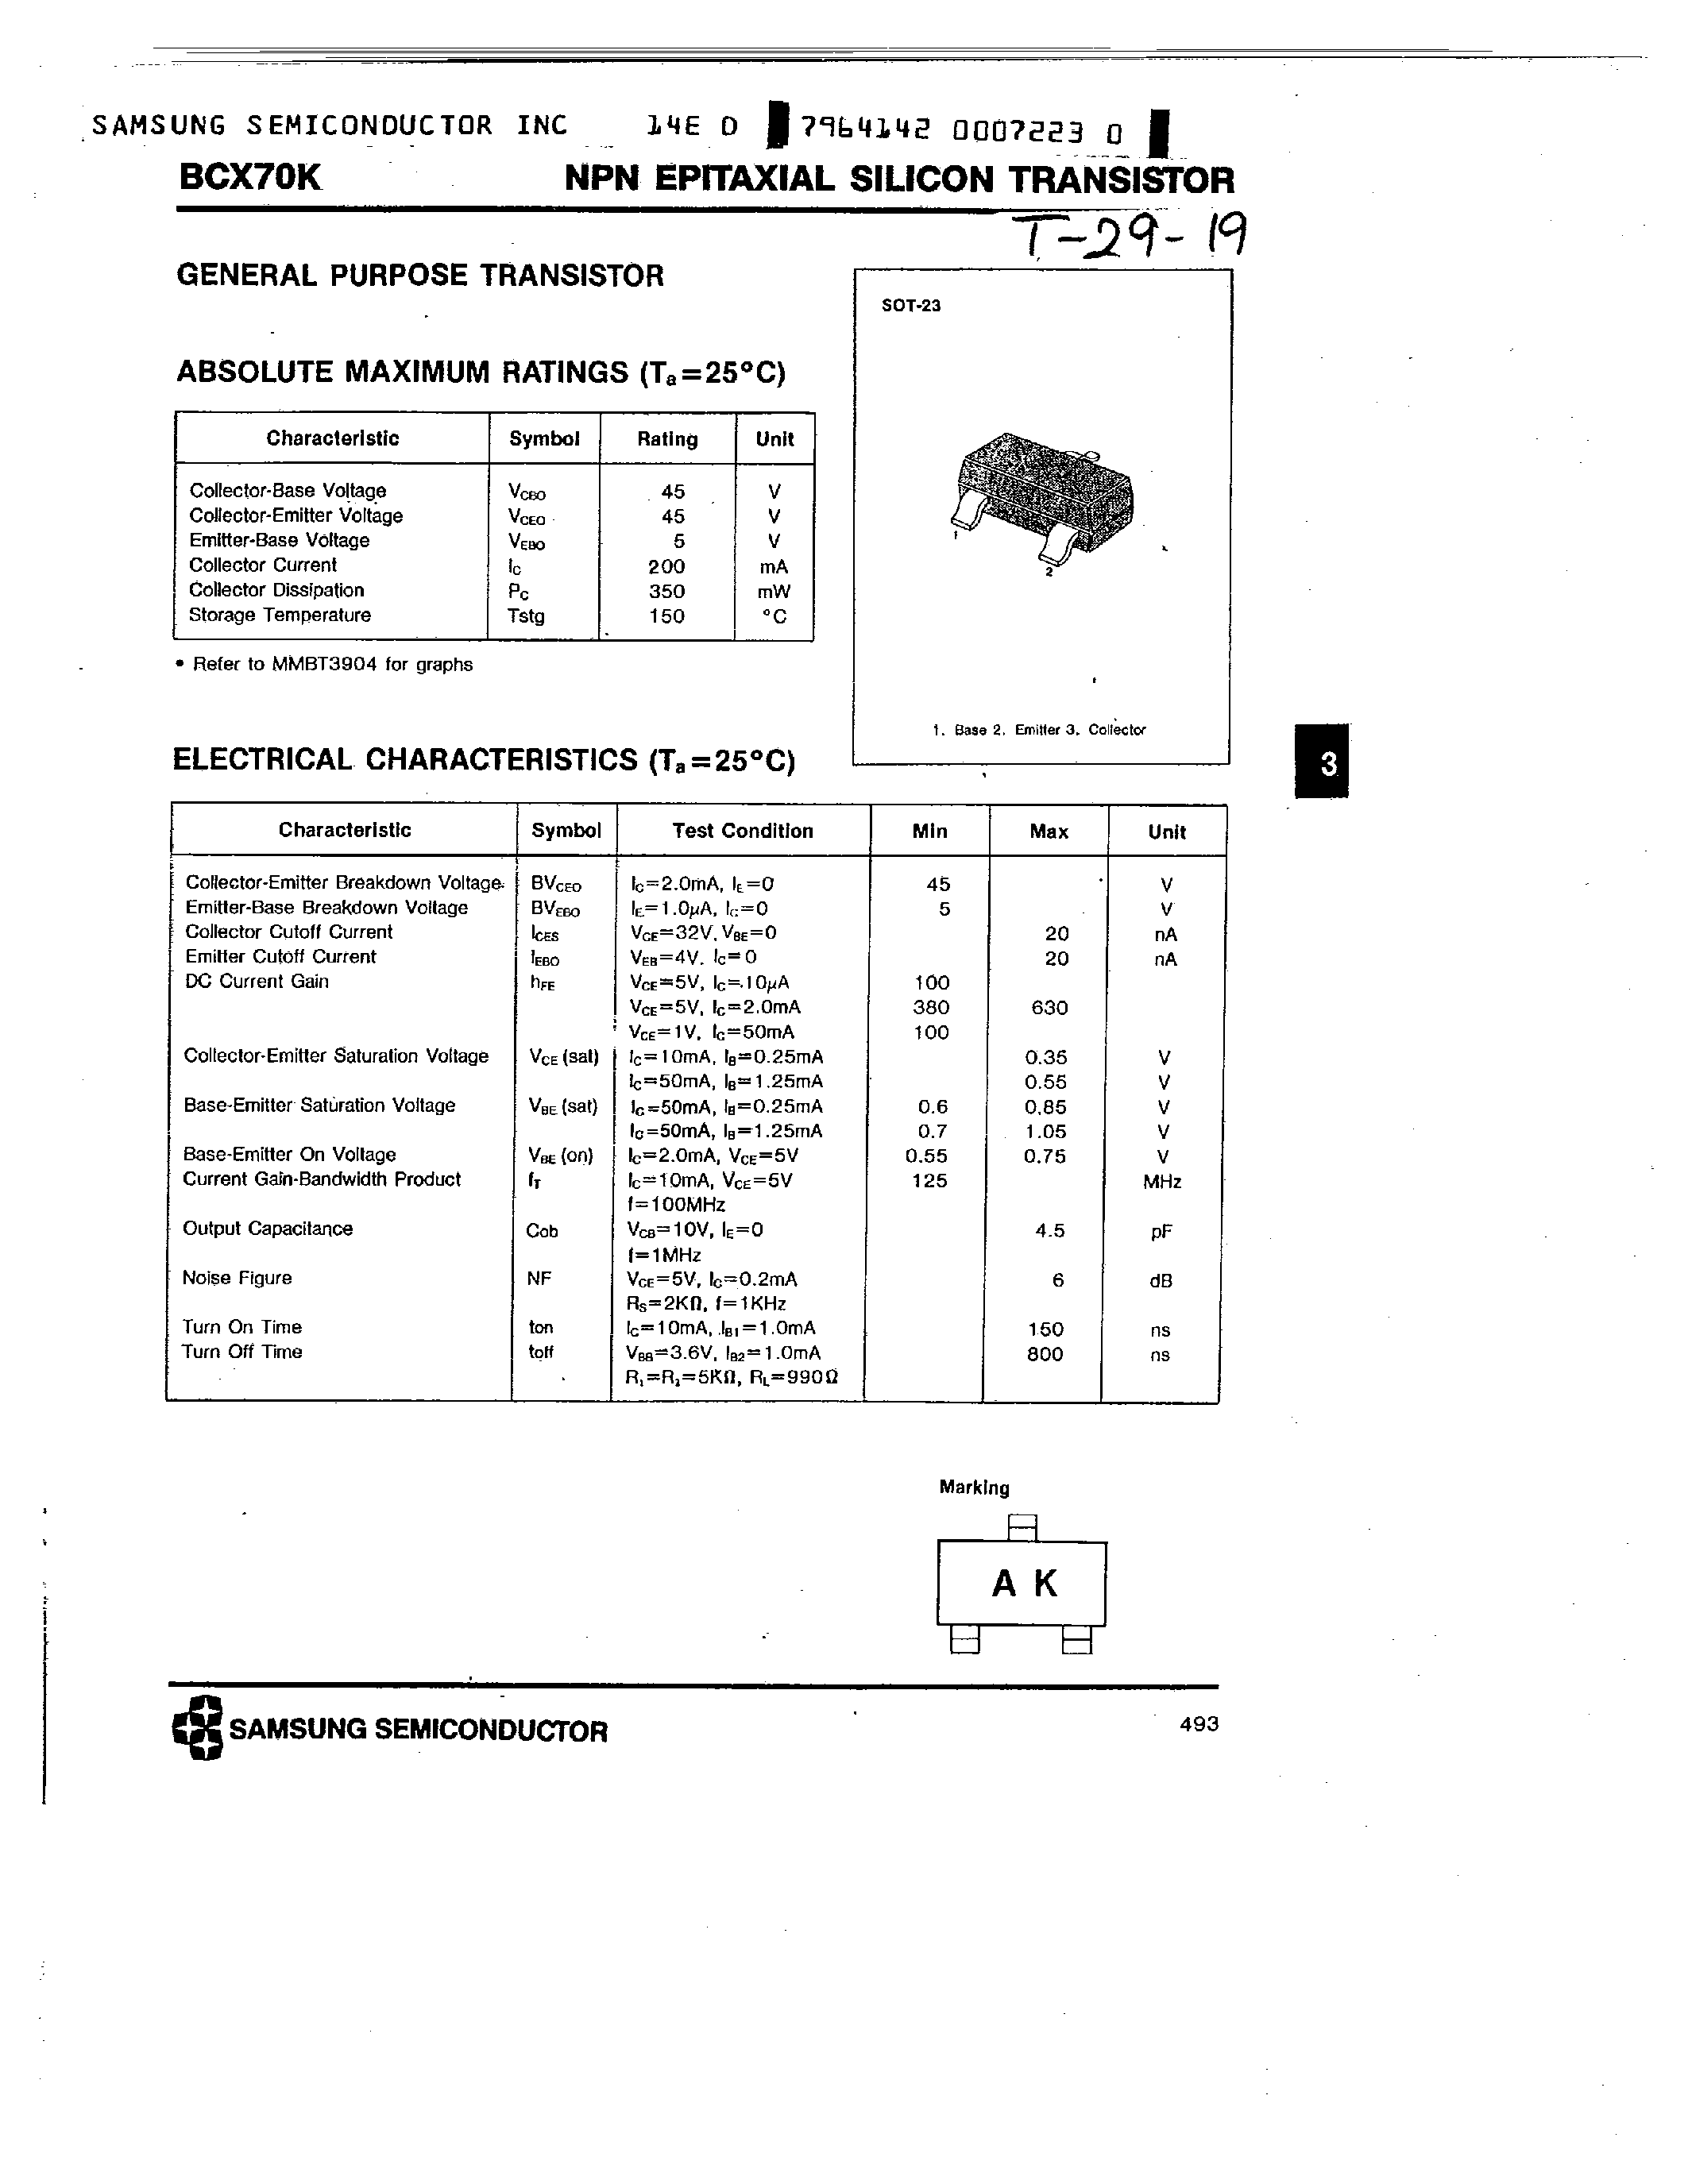 Datasheet BCX70K - NPN EPITAXIAL SILICON TRANSISTOR page 1